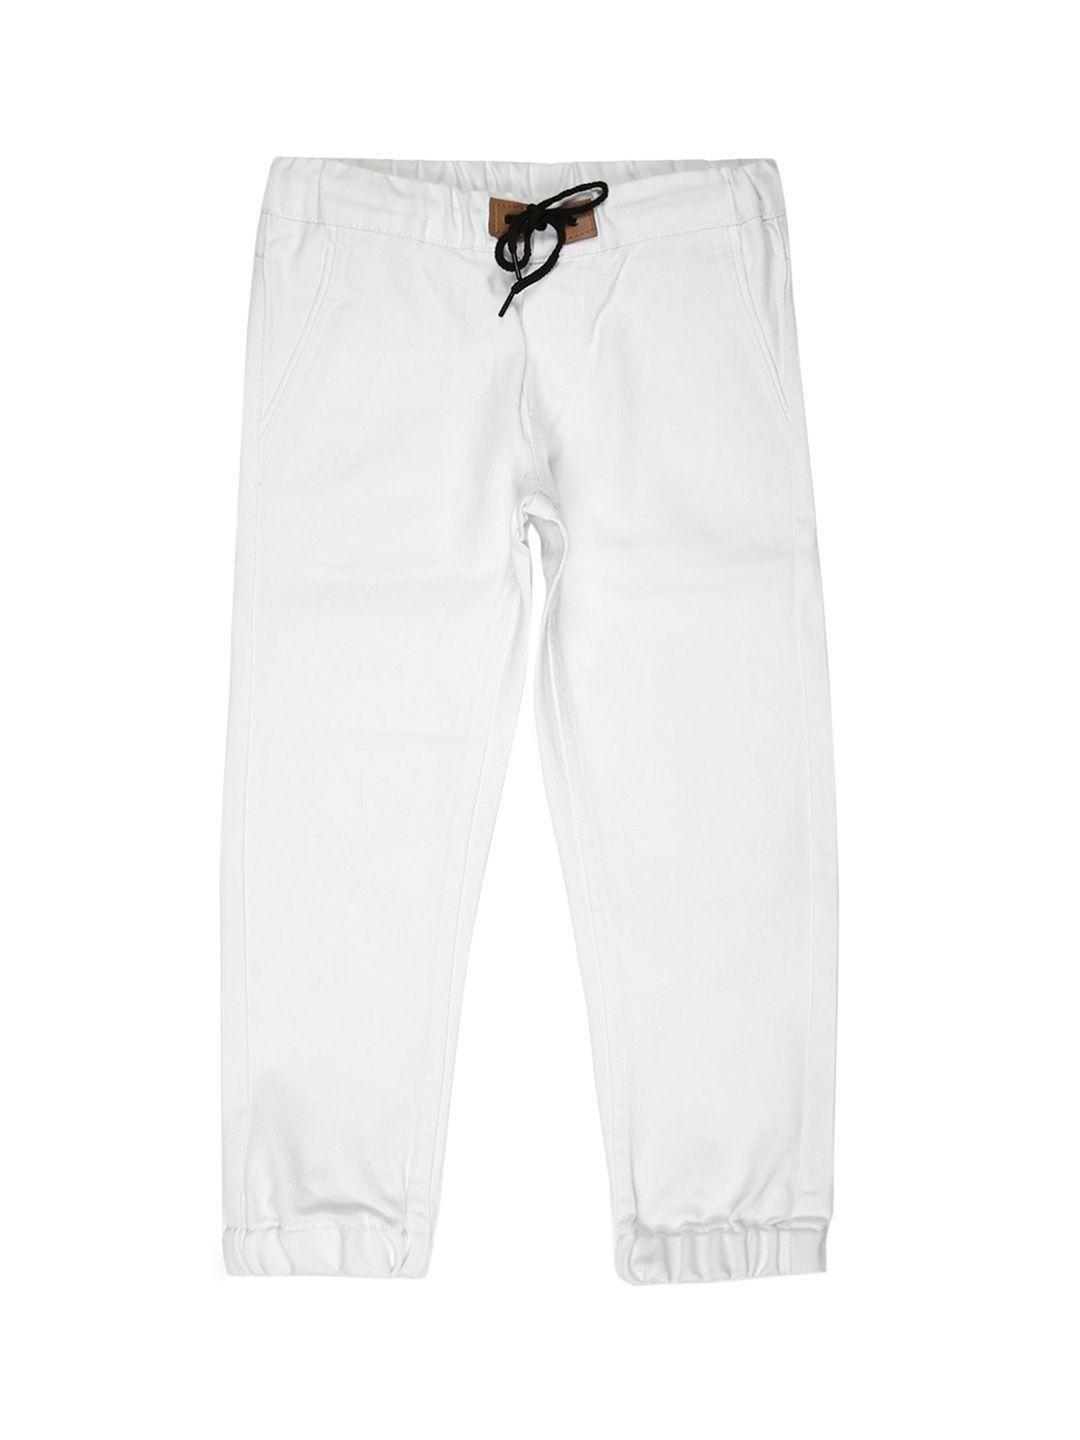 urbano juniors boys white slim fit chinos trousers